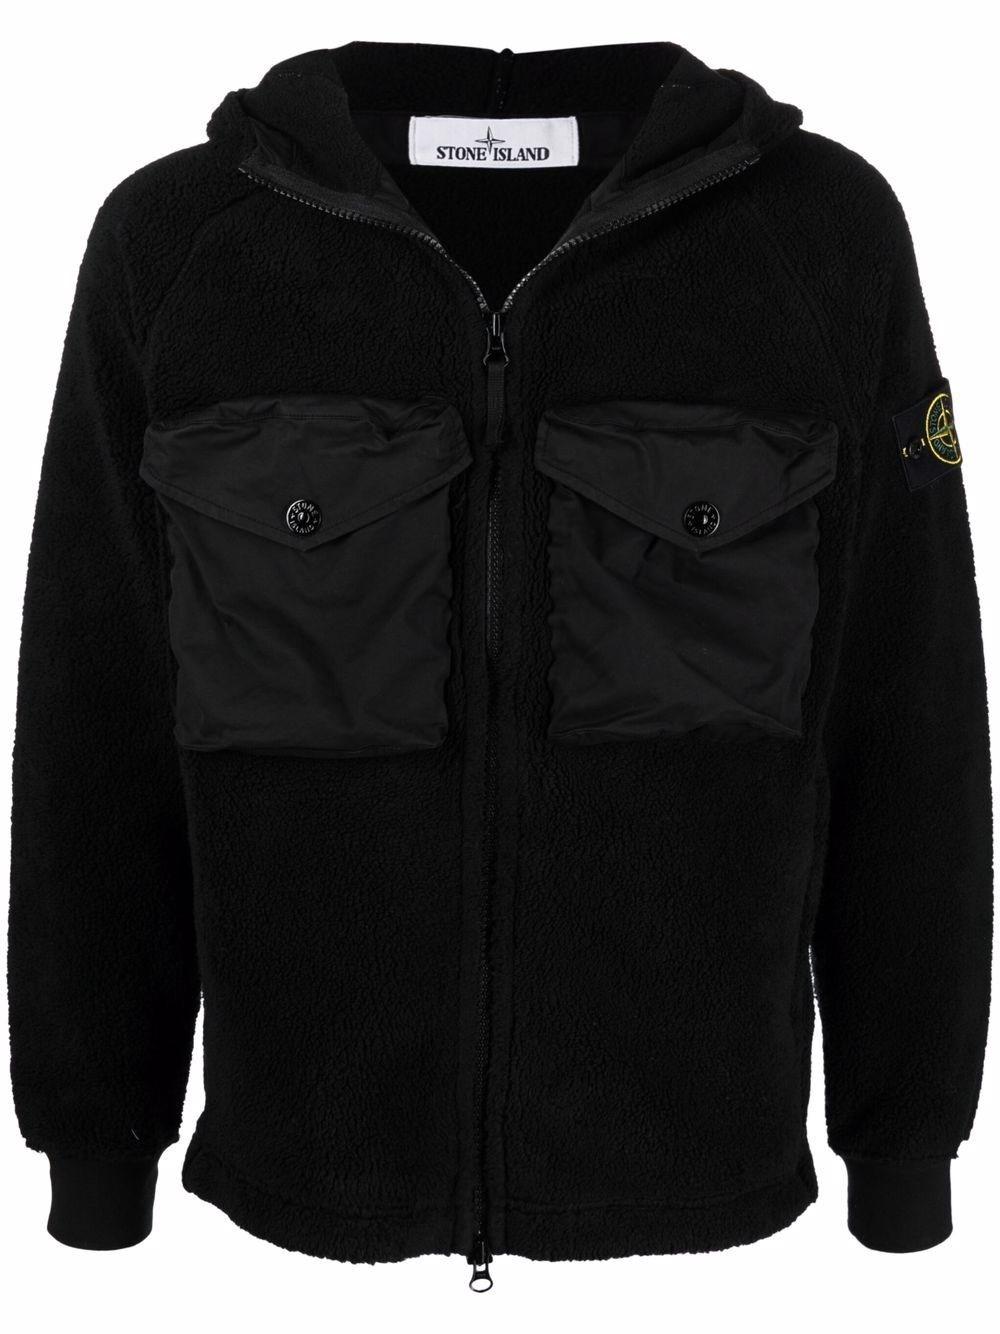 Stone Island Compass-patch Fleece Jacket in Black for Men | Lyst